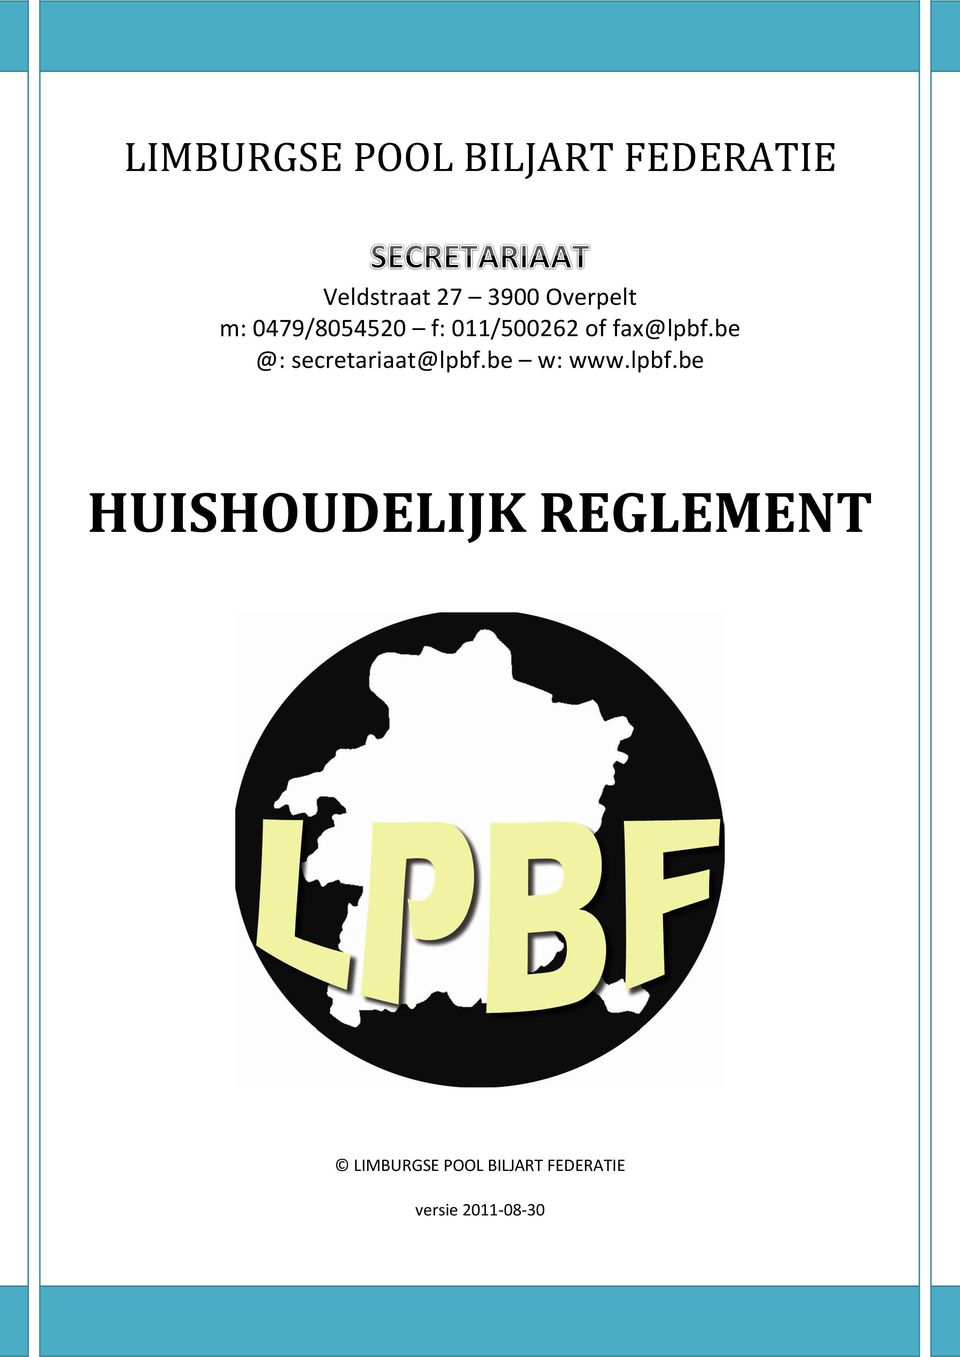 be @: secretariaat@lpbf.